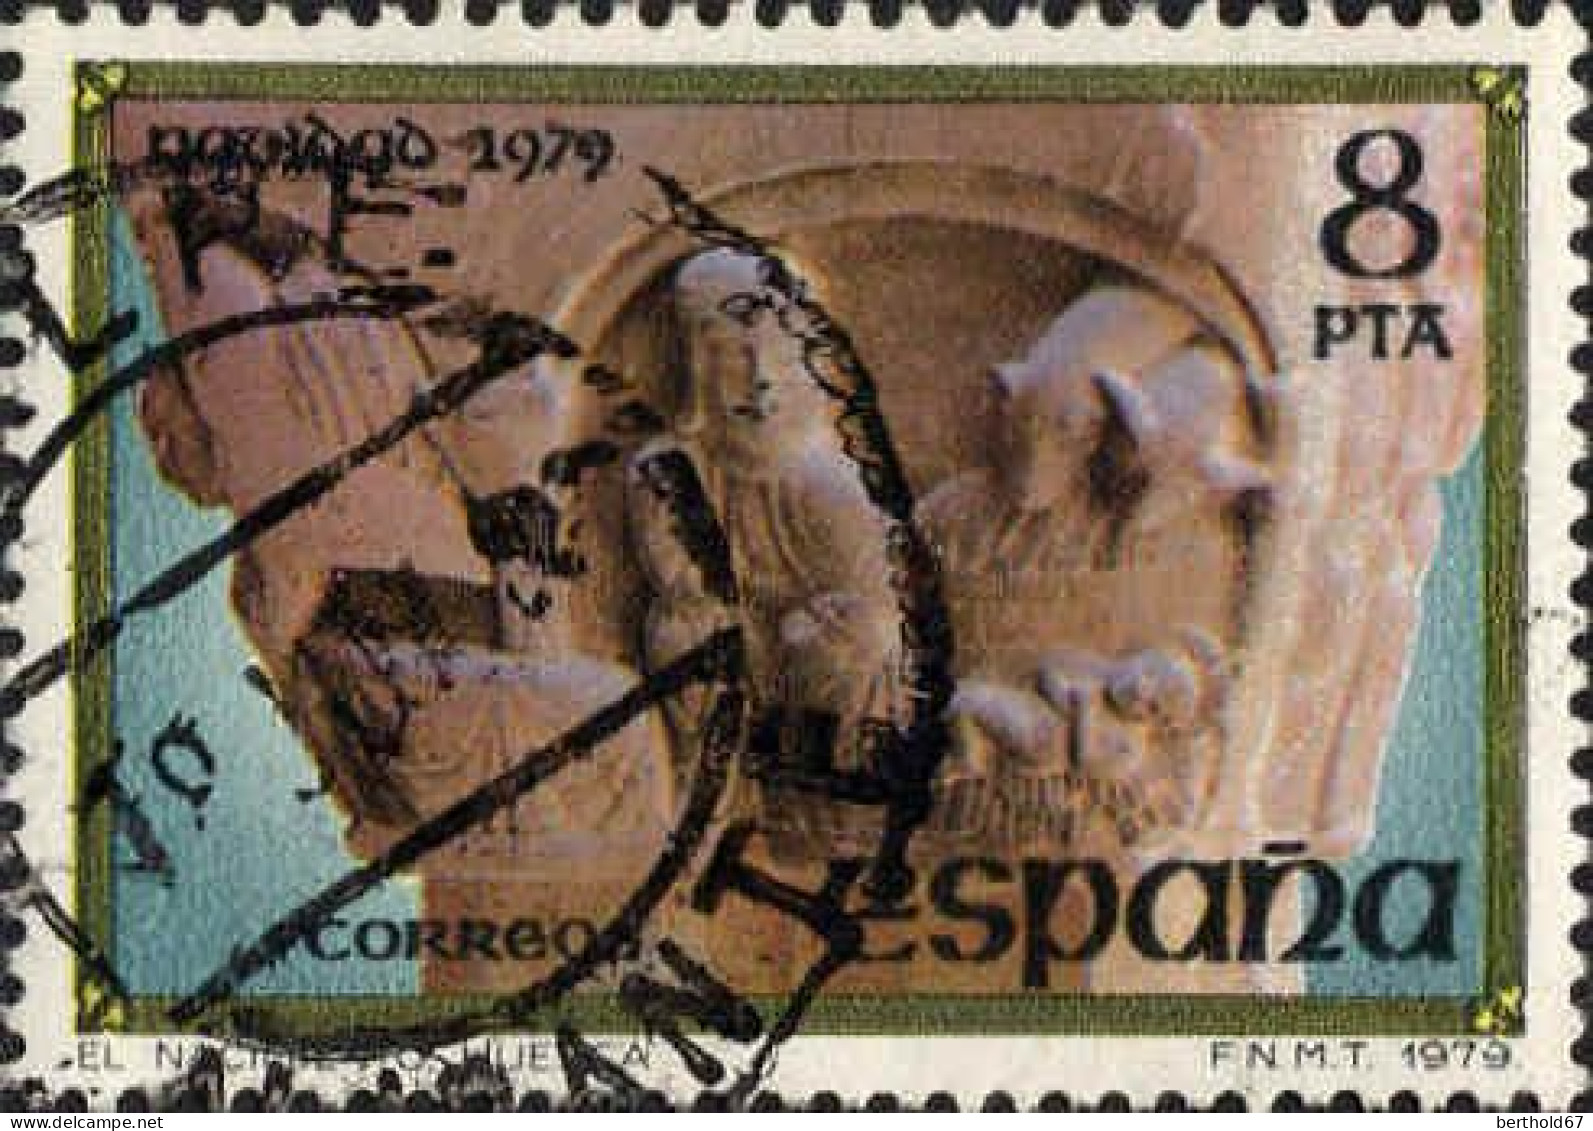 Espagne Poste Obl Yv:2196 Mi:2442 Navidad 1979 El Nacimiento Huesca (TB Cachet Rond) - Used Stamps